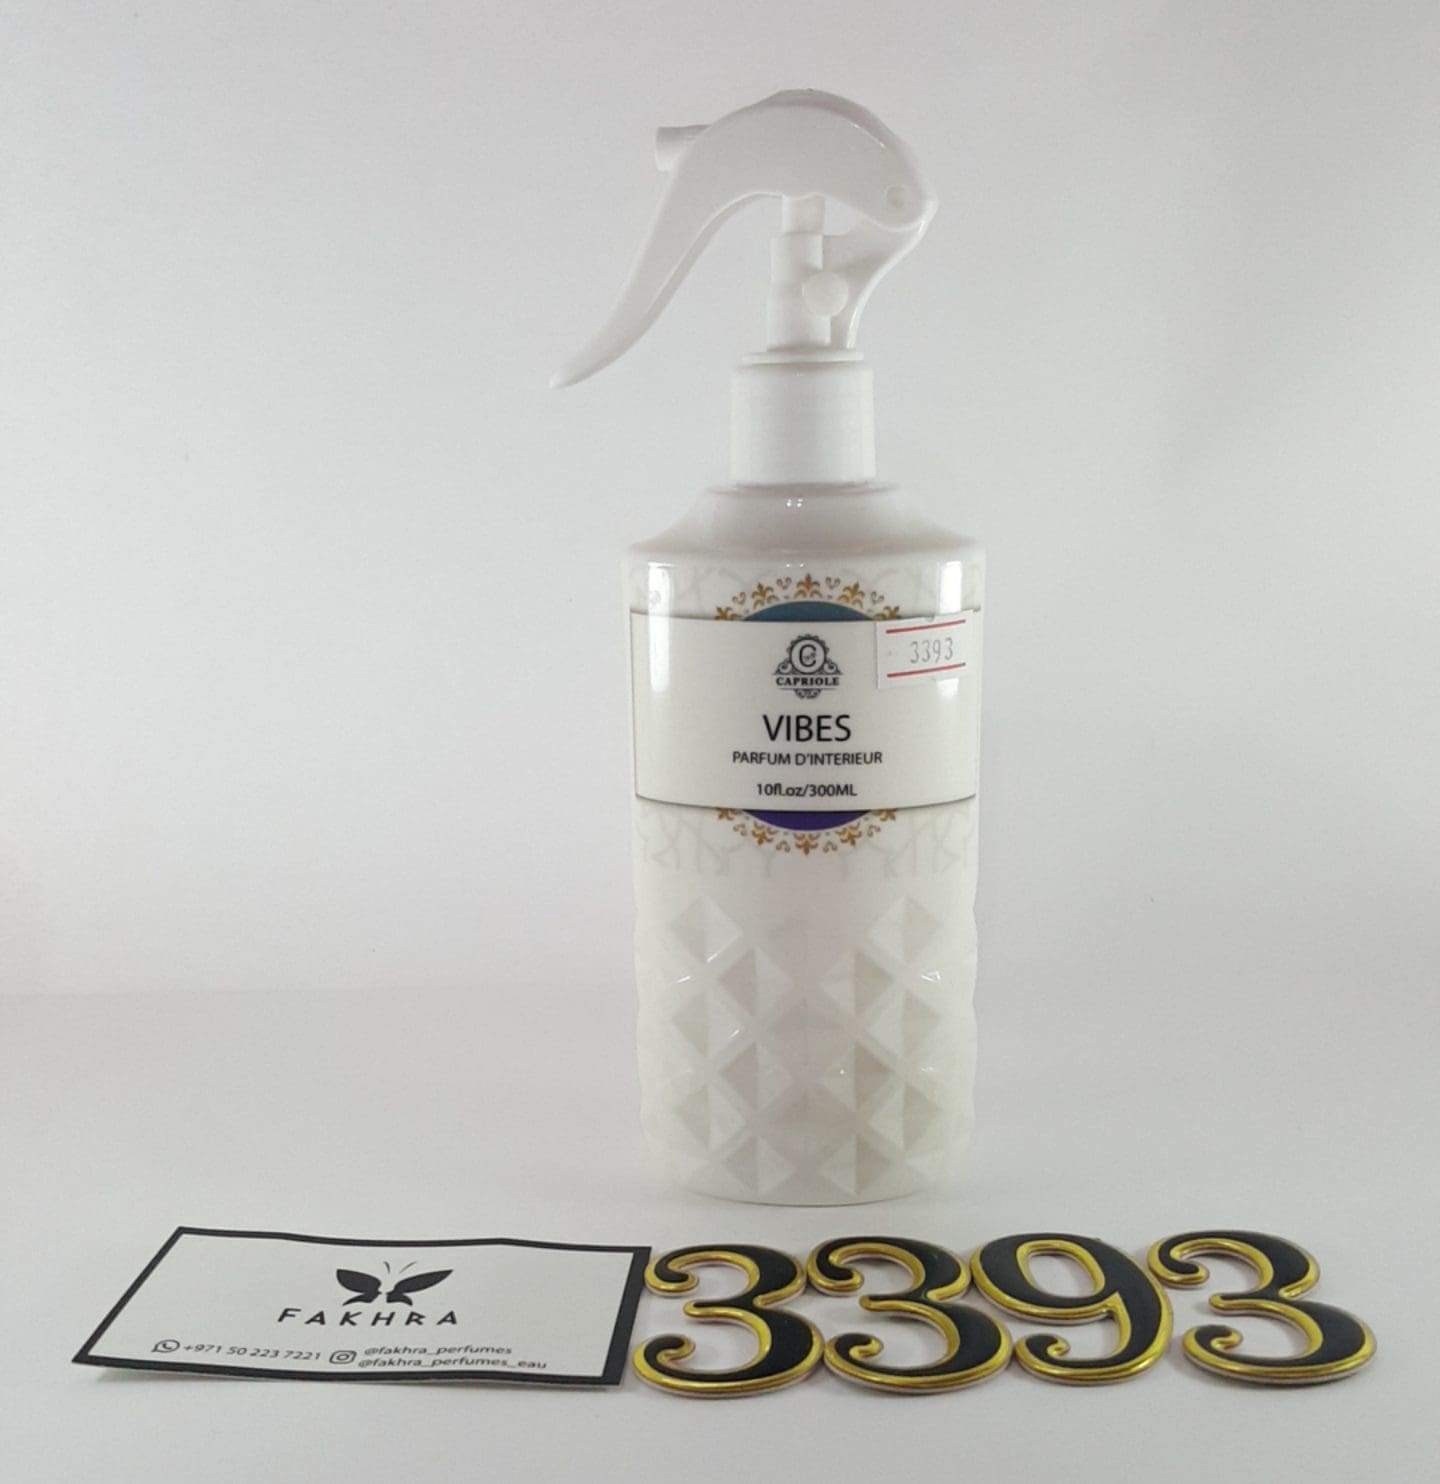 3393 Capriole VIBES Home perfume 300 ml